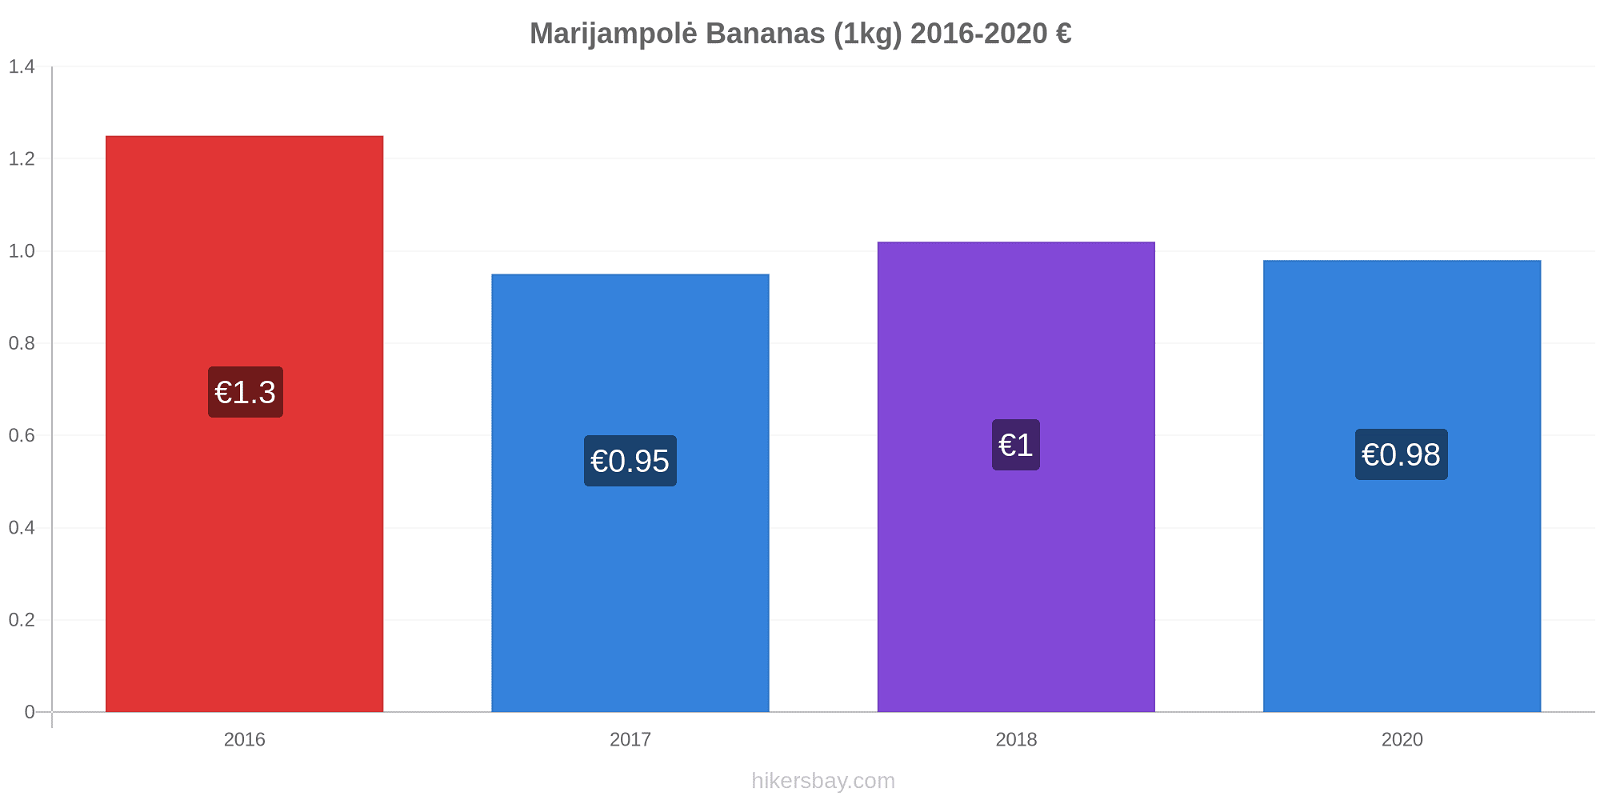 Marijampolė price changes Bananas (1kg) hikersbay.com